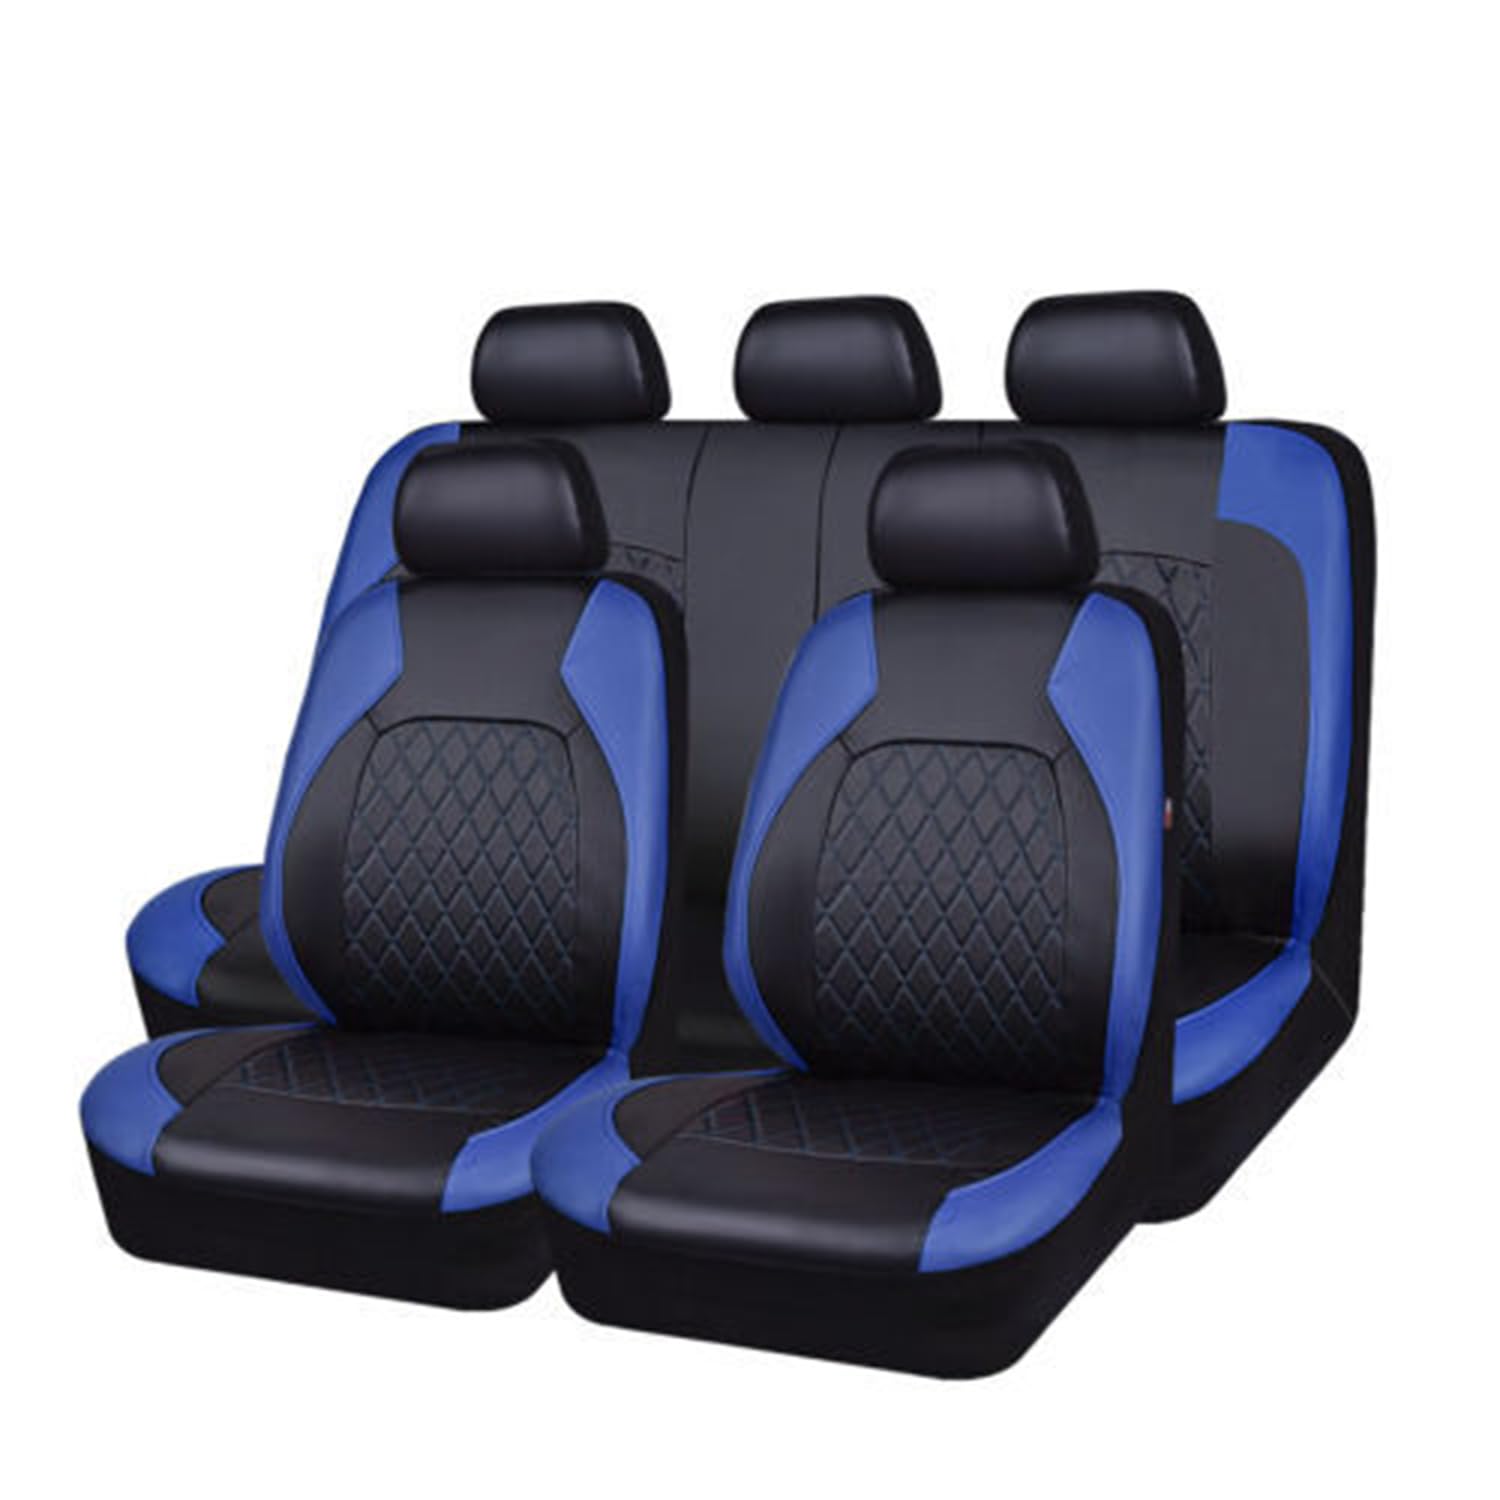 MIELEU Auto Schonbezug Set Kompatibel für VW Polo -Plus 2019-2023, 9 PCS Leder Autositzbezüge Sitzschoner für Vordersitze und Rücksitze,Blue von MIELEU